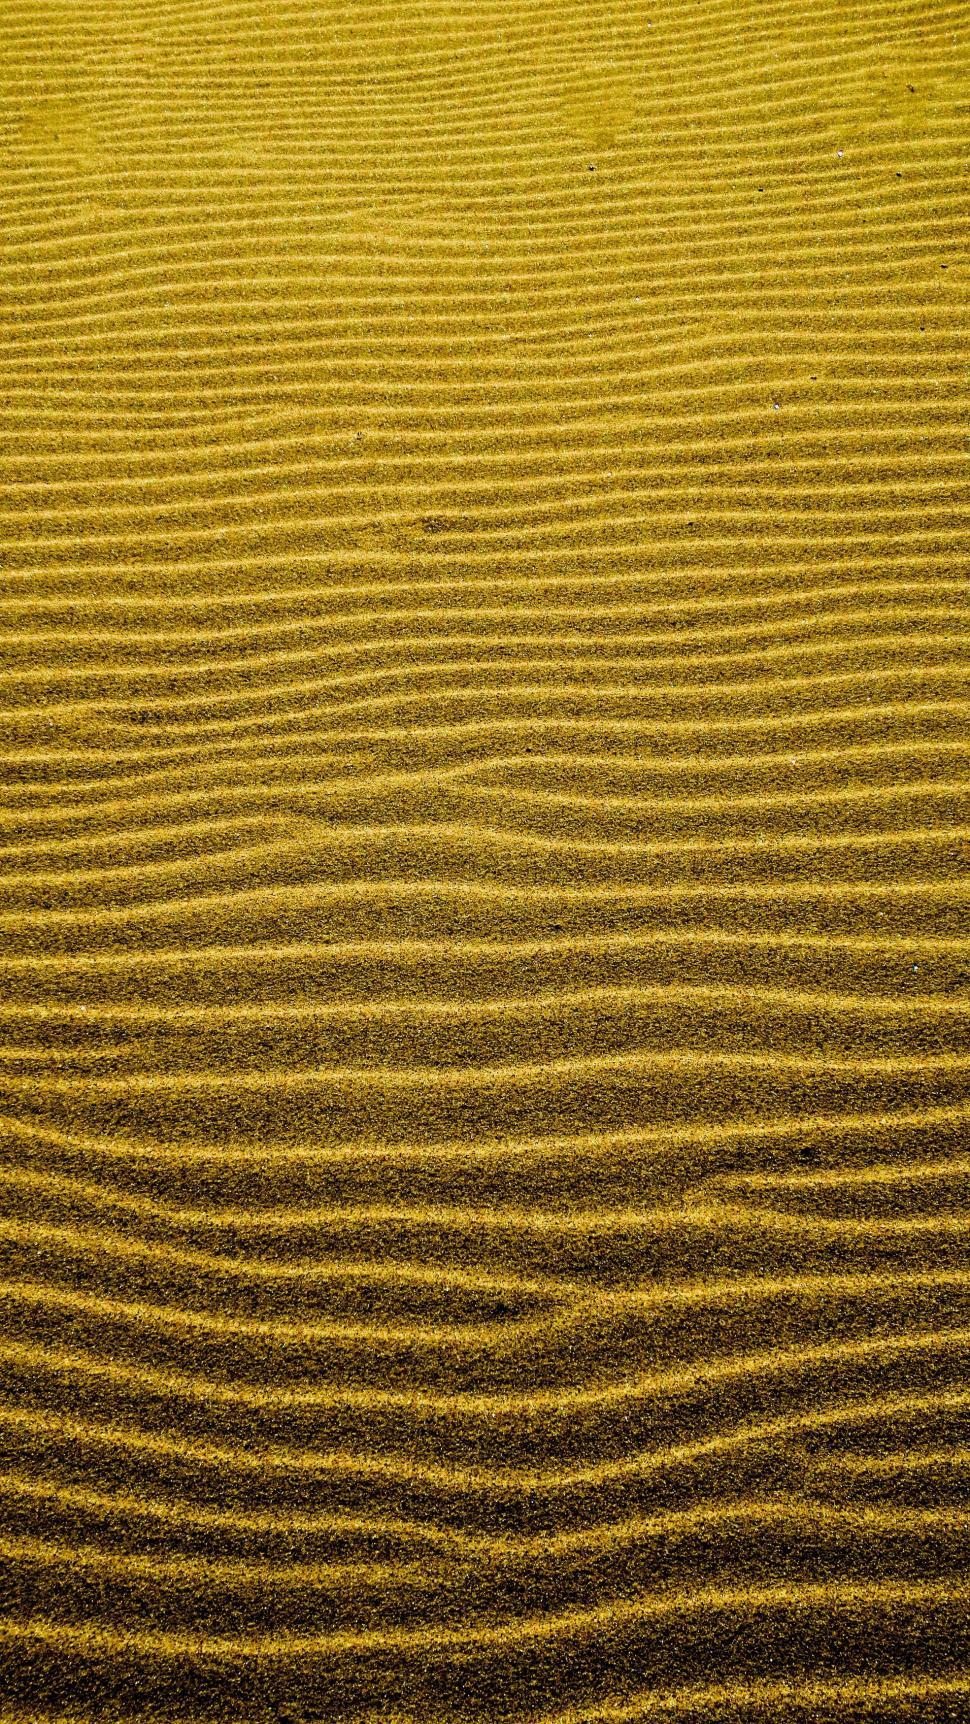 Free Image of Rippled Yellow Sand Dune 